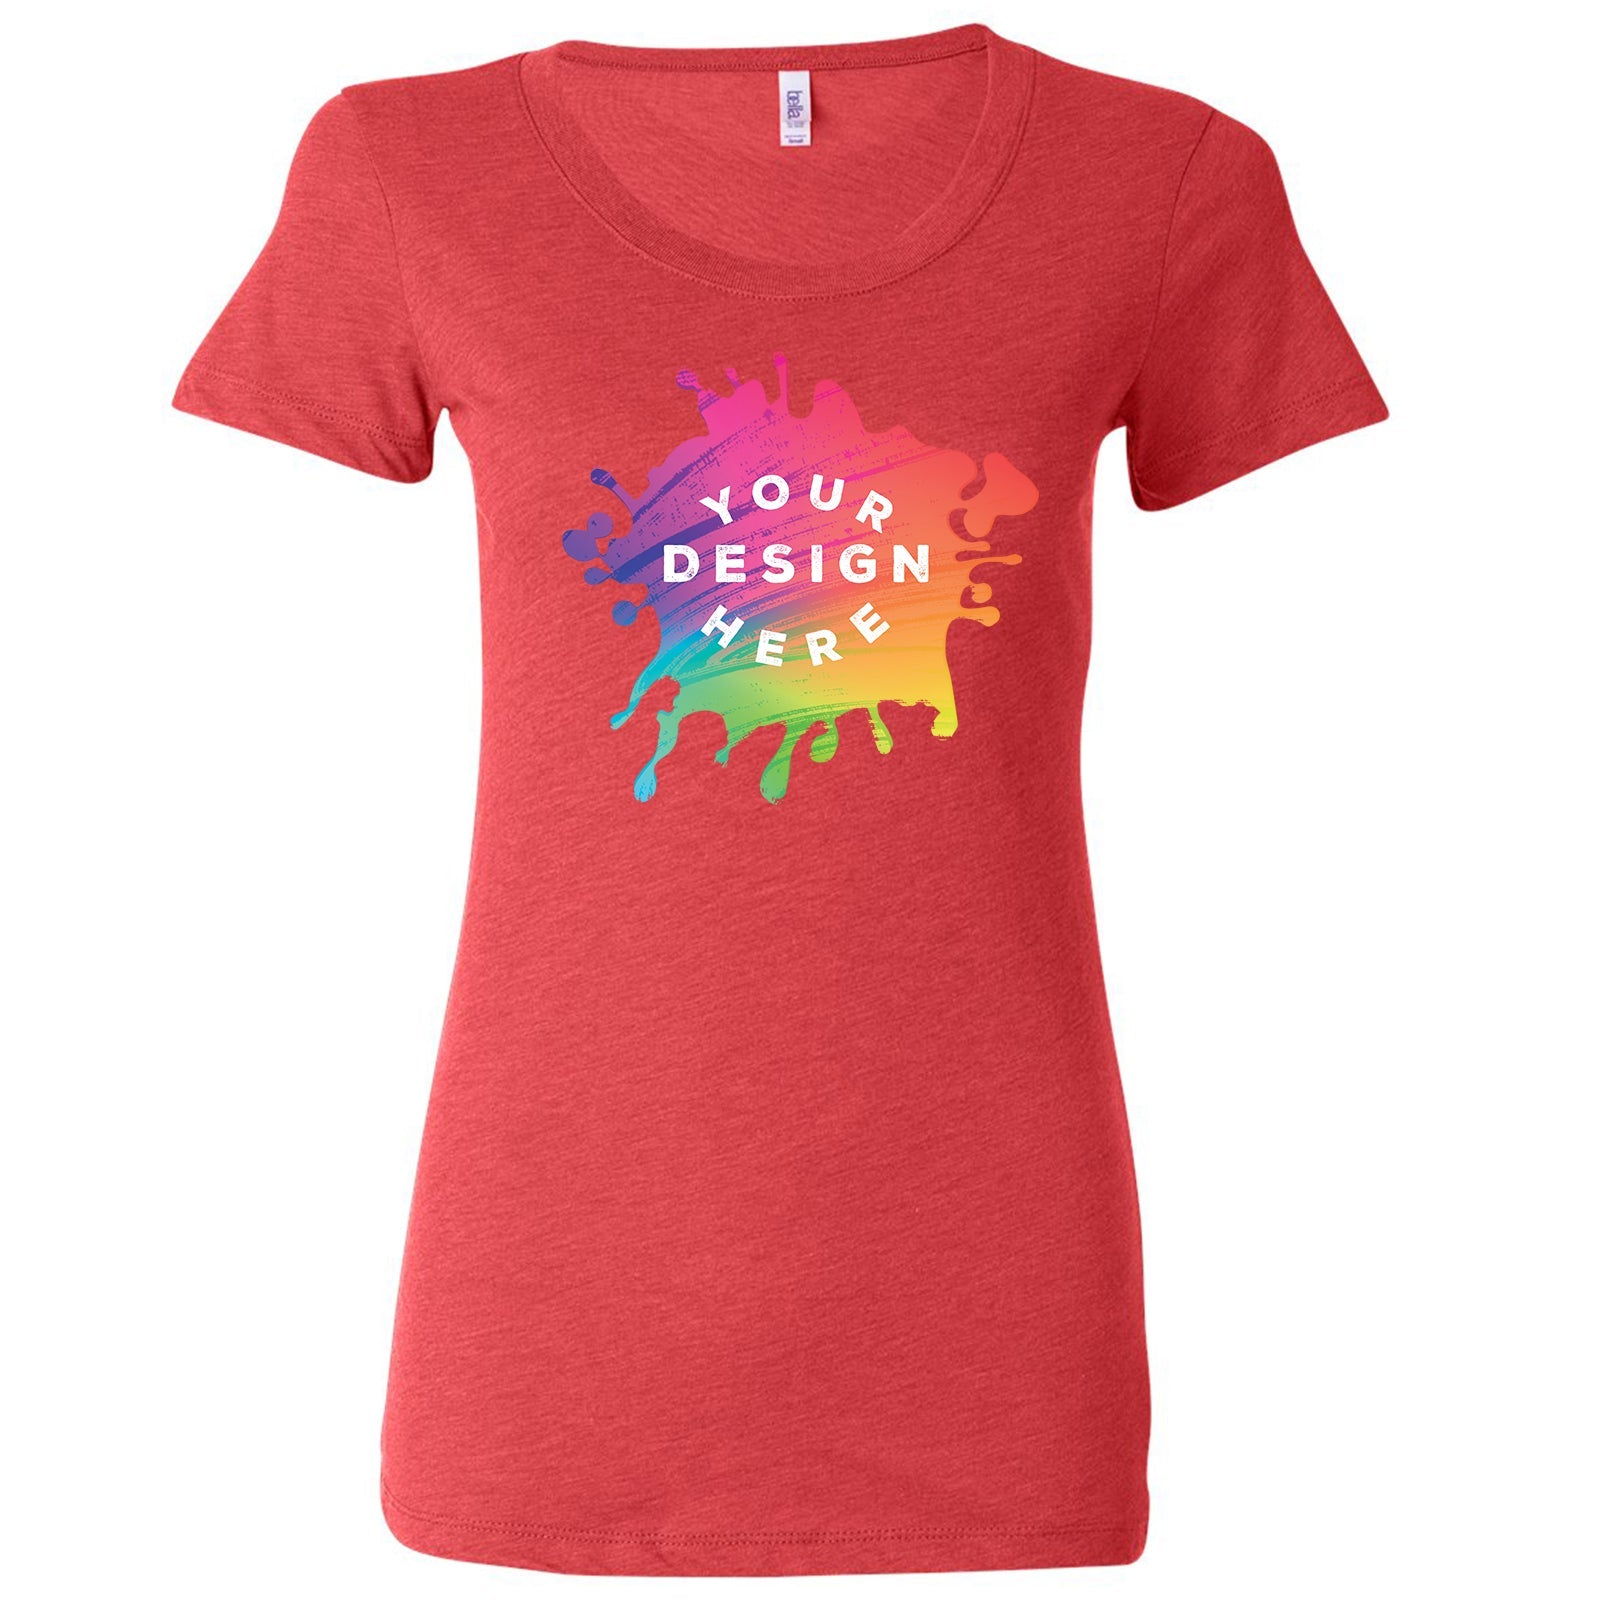 Bella + Canvas Women's Triblend T-Shirt - Mato & Hash